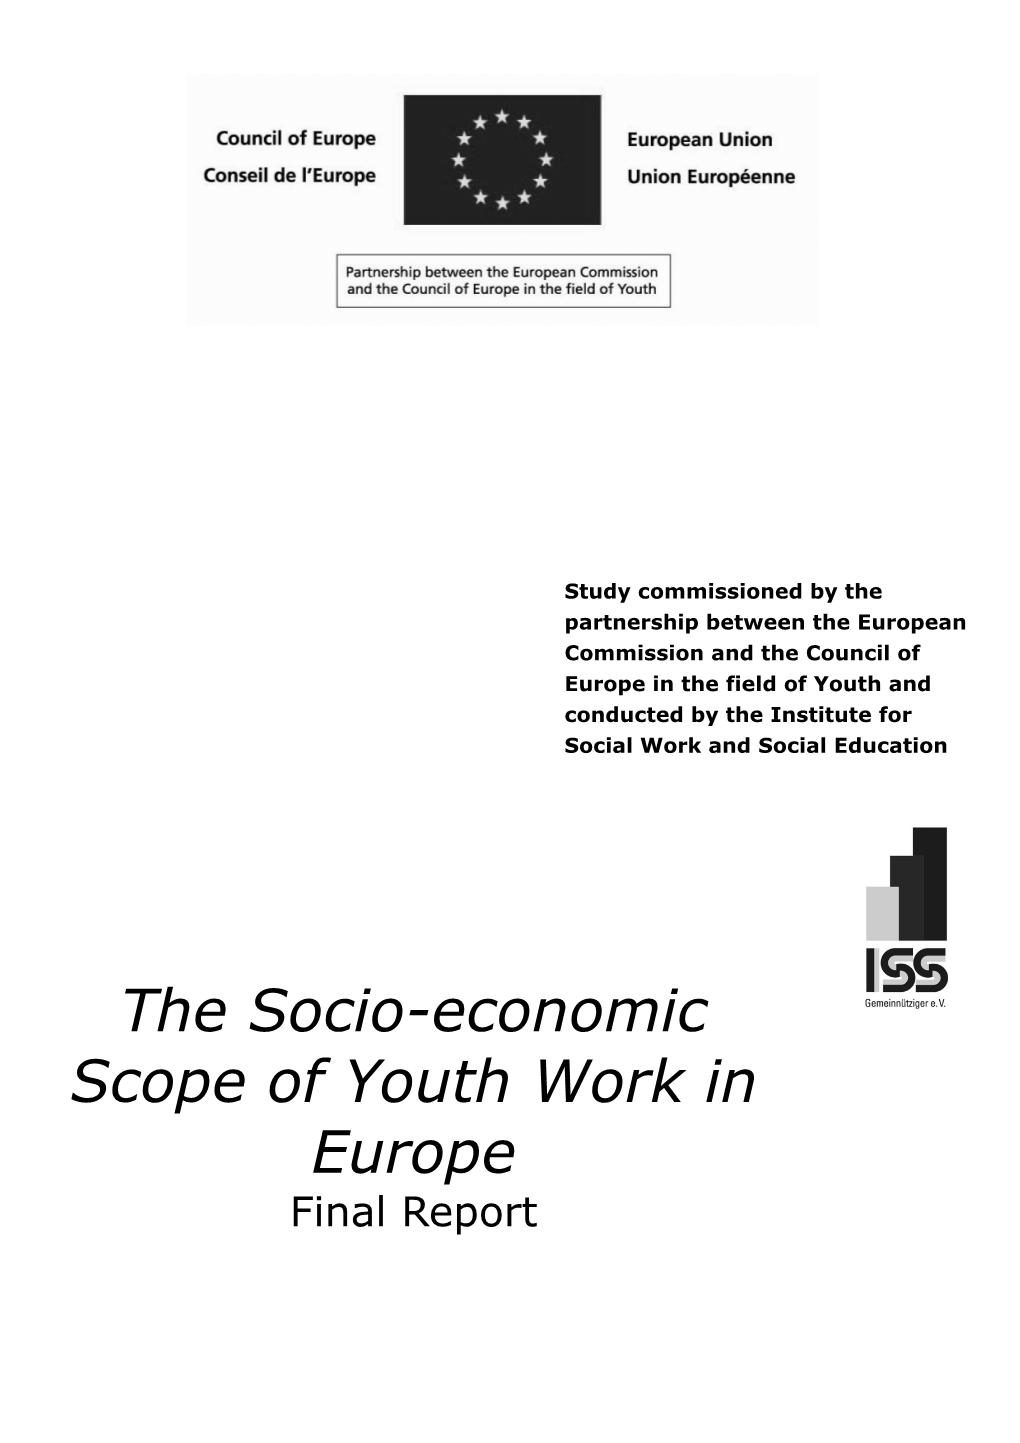 Study on the Socio-Economic Scope of Youth Work